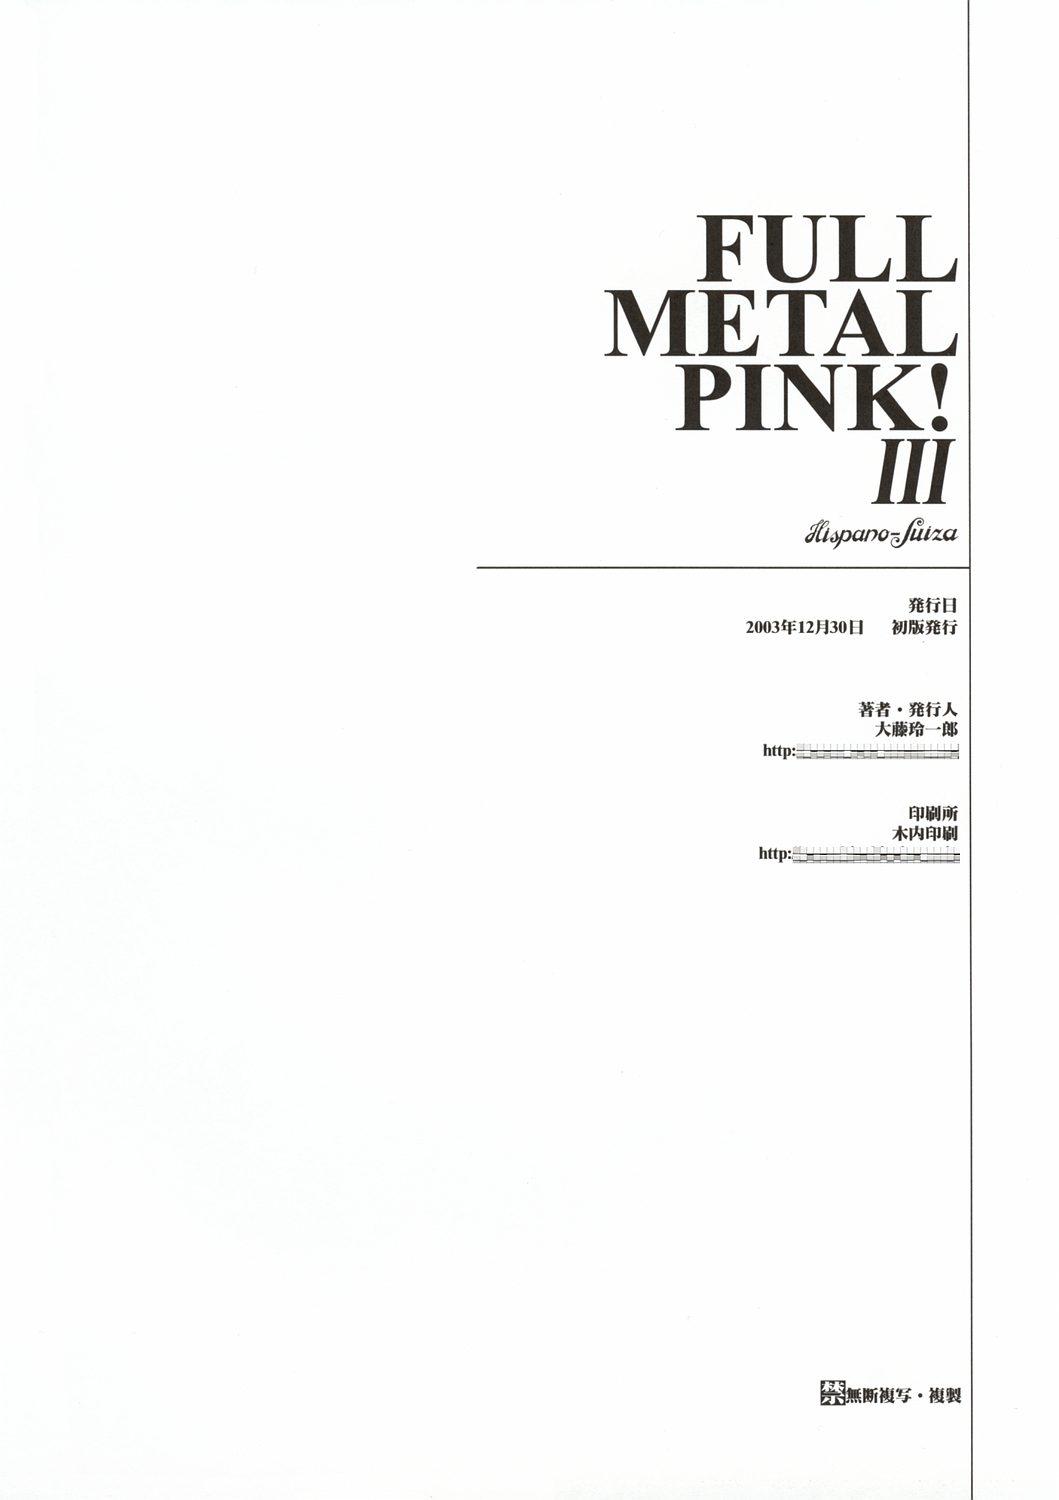 FULL METAL PINK! III 48